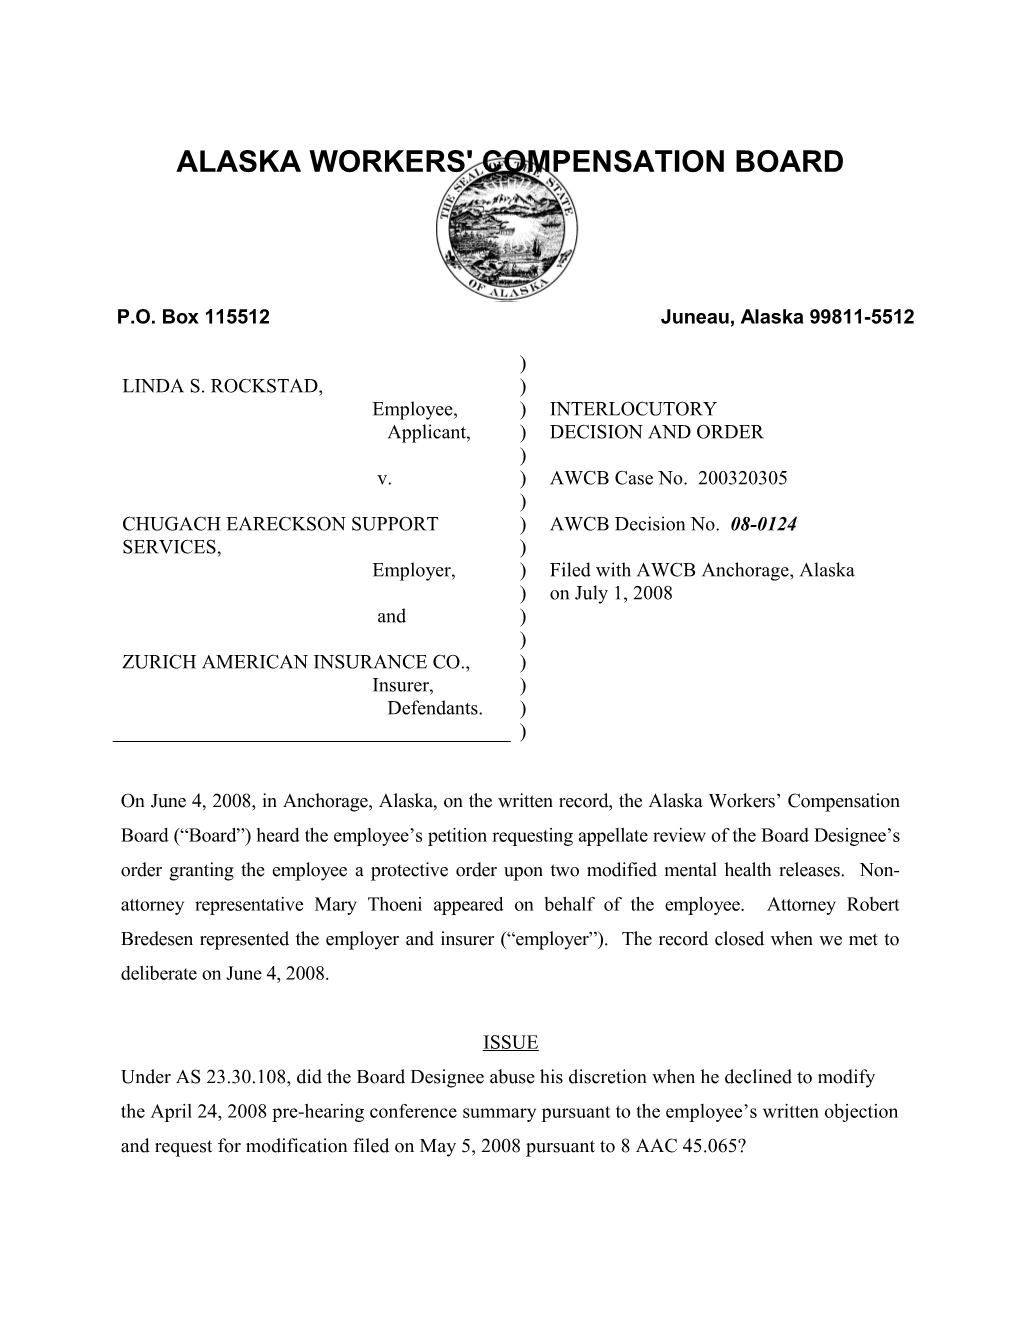 Alaska Workers' Compensation Board